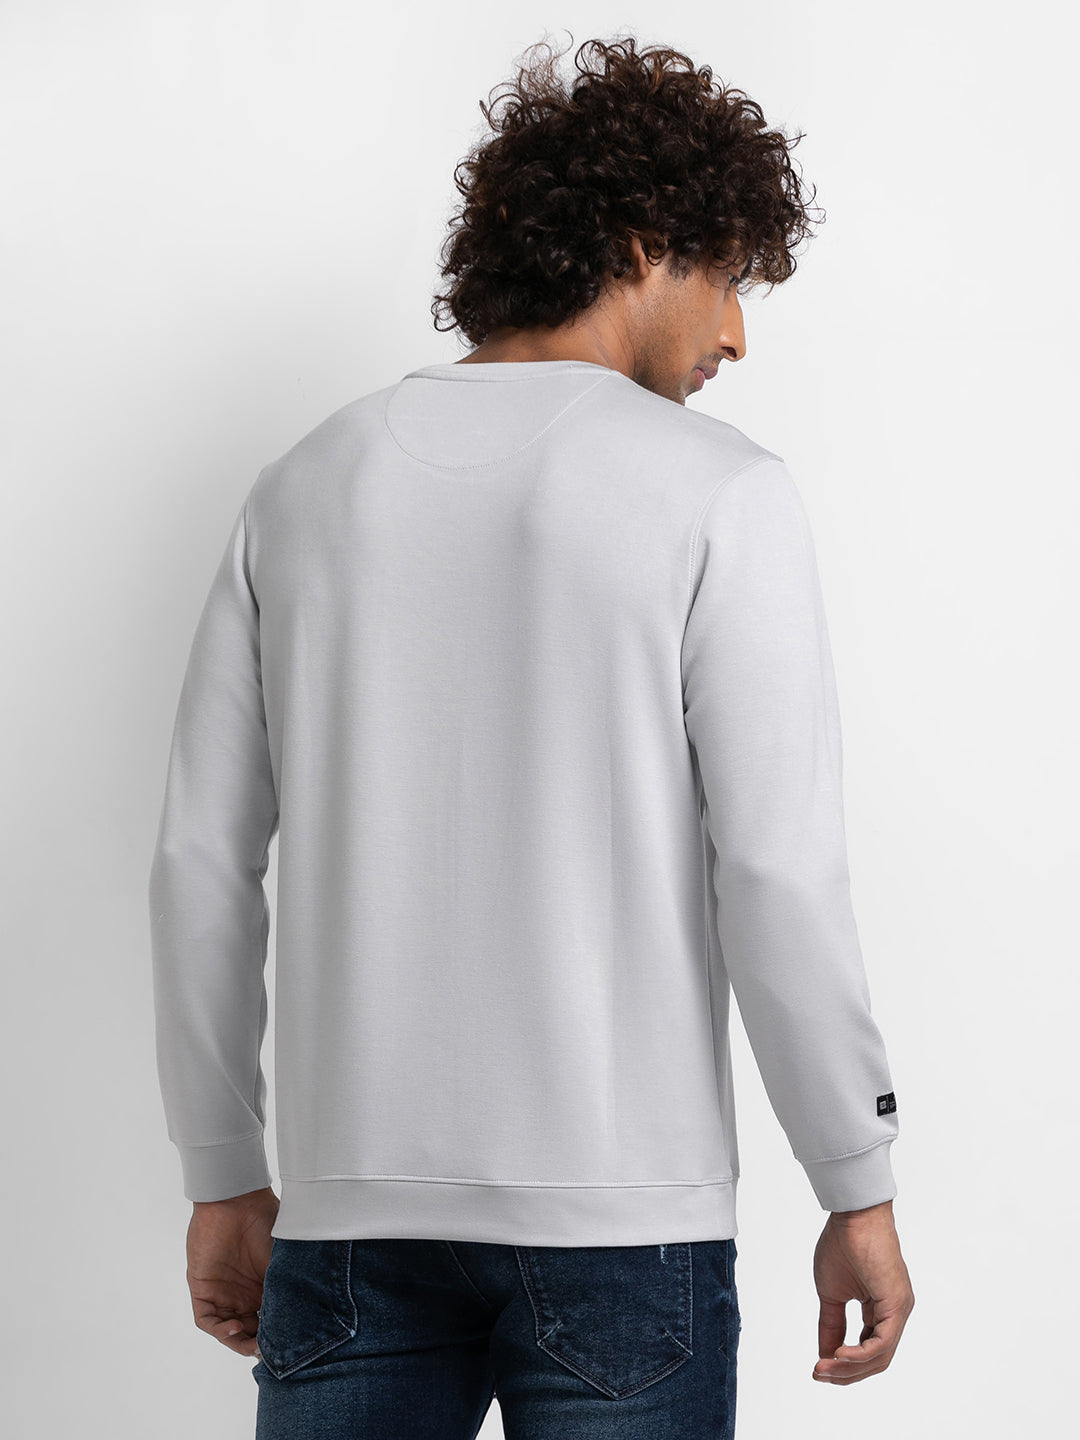 Spykar Silver Grey Cotton Full Sleeve Round Neck Sweatshirt For Men